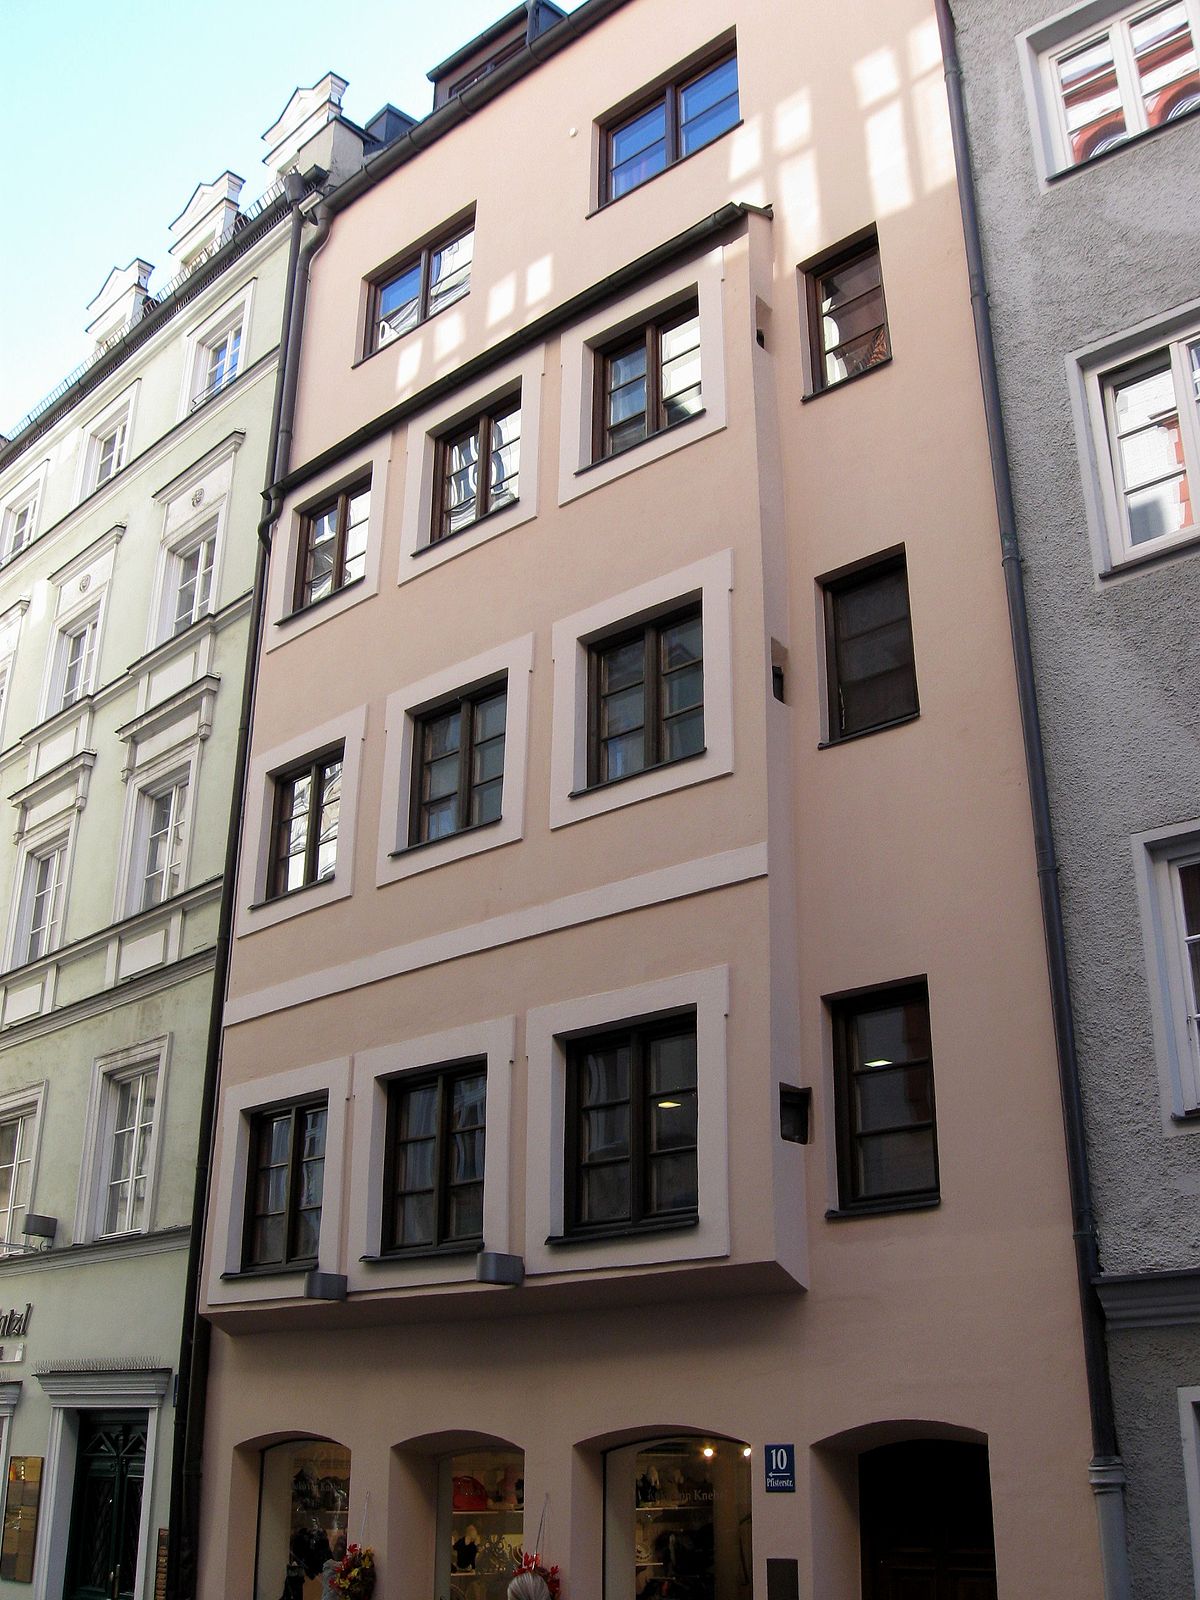 File:Mobilfunkmasten auf Wohnhaus Gotzingerplatz Muenchen.JPG - Wikimedia  Commons